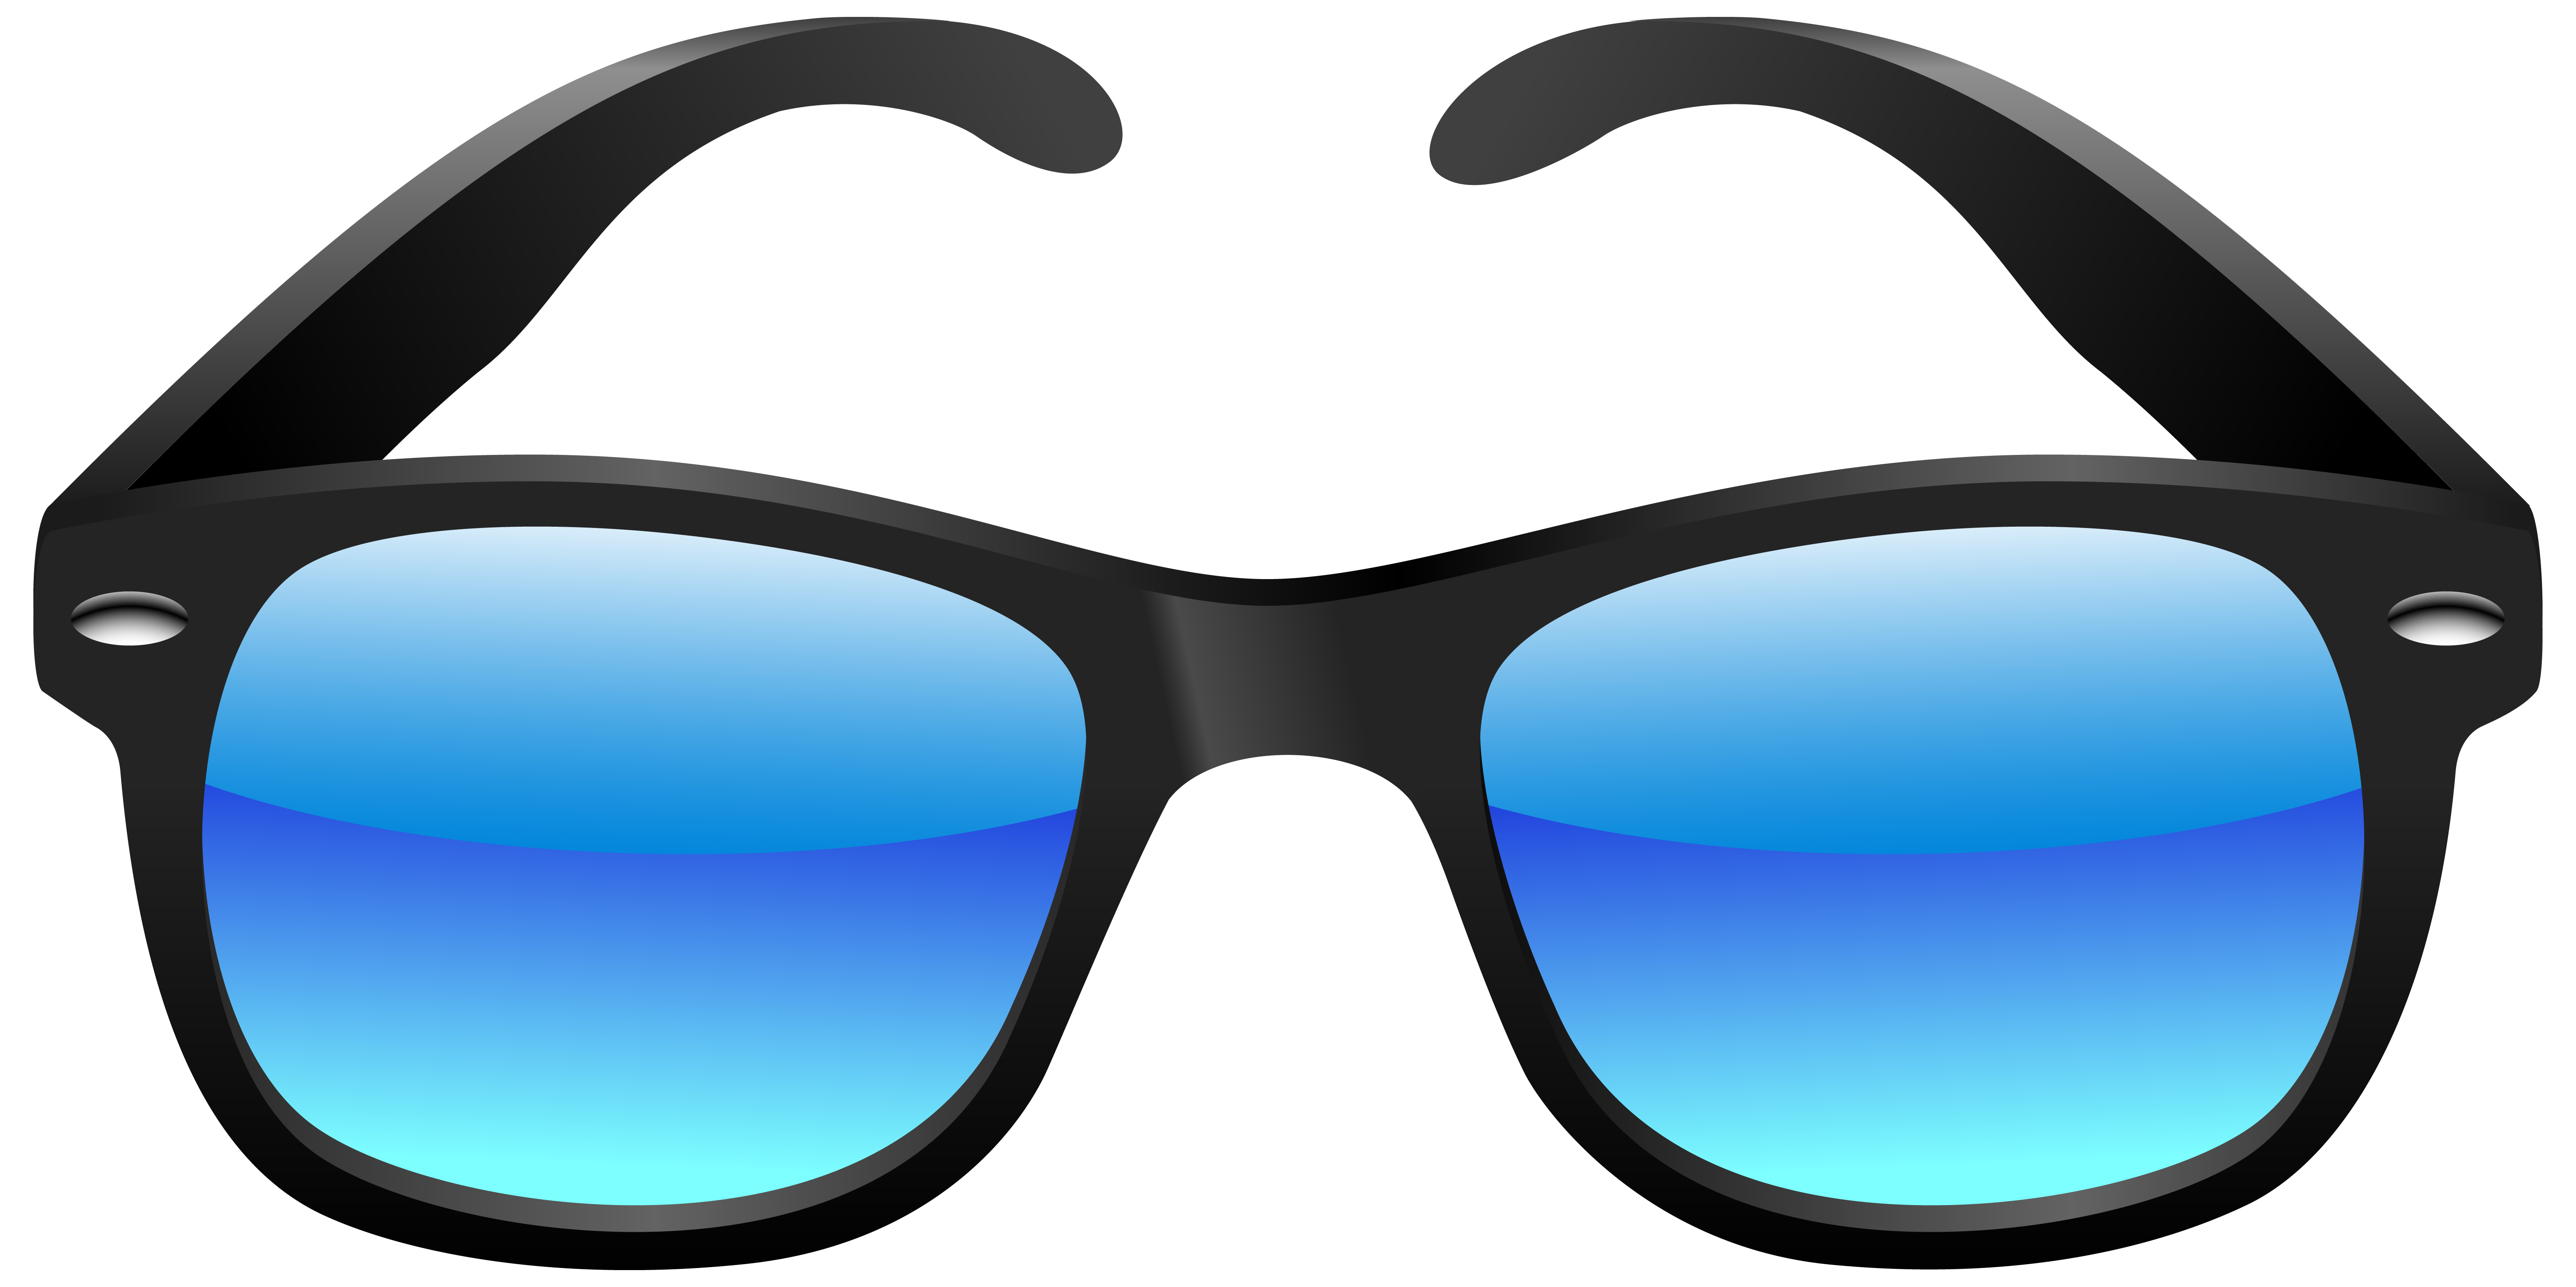 Clip art of sunglasses. Vision clipart goal